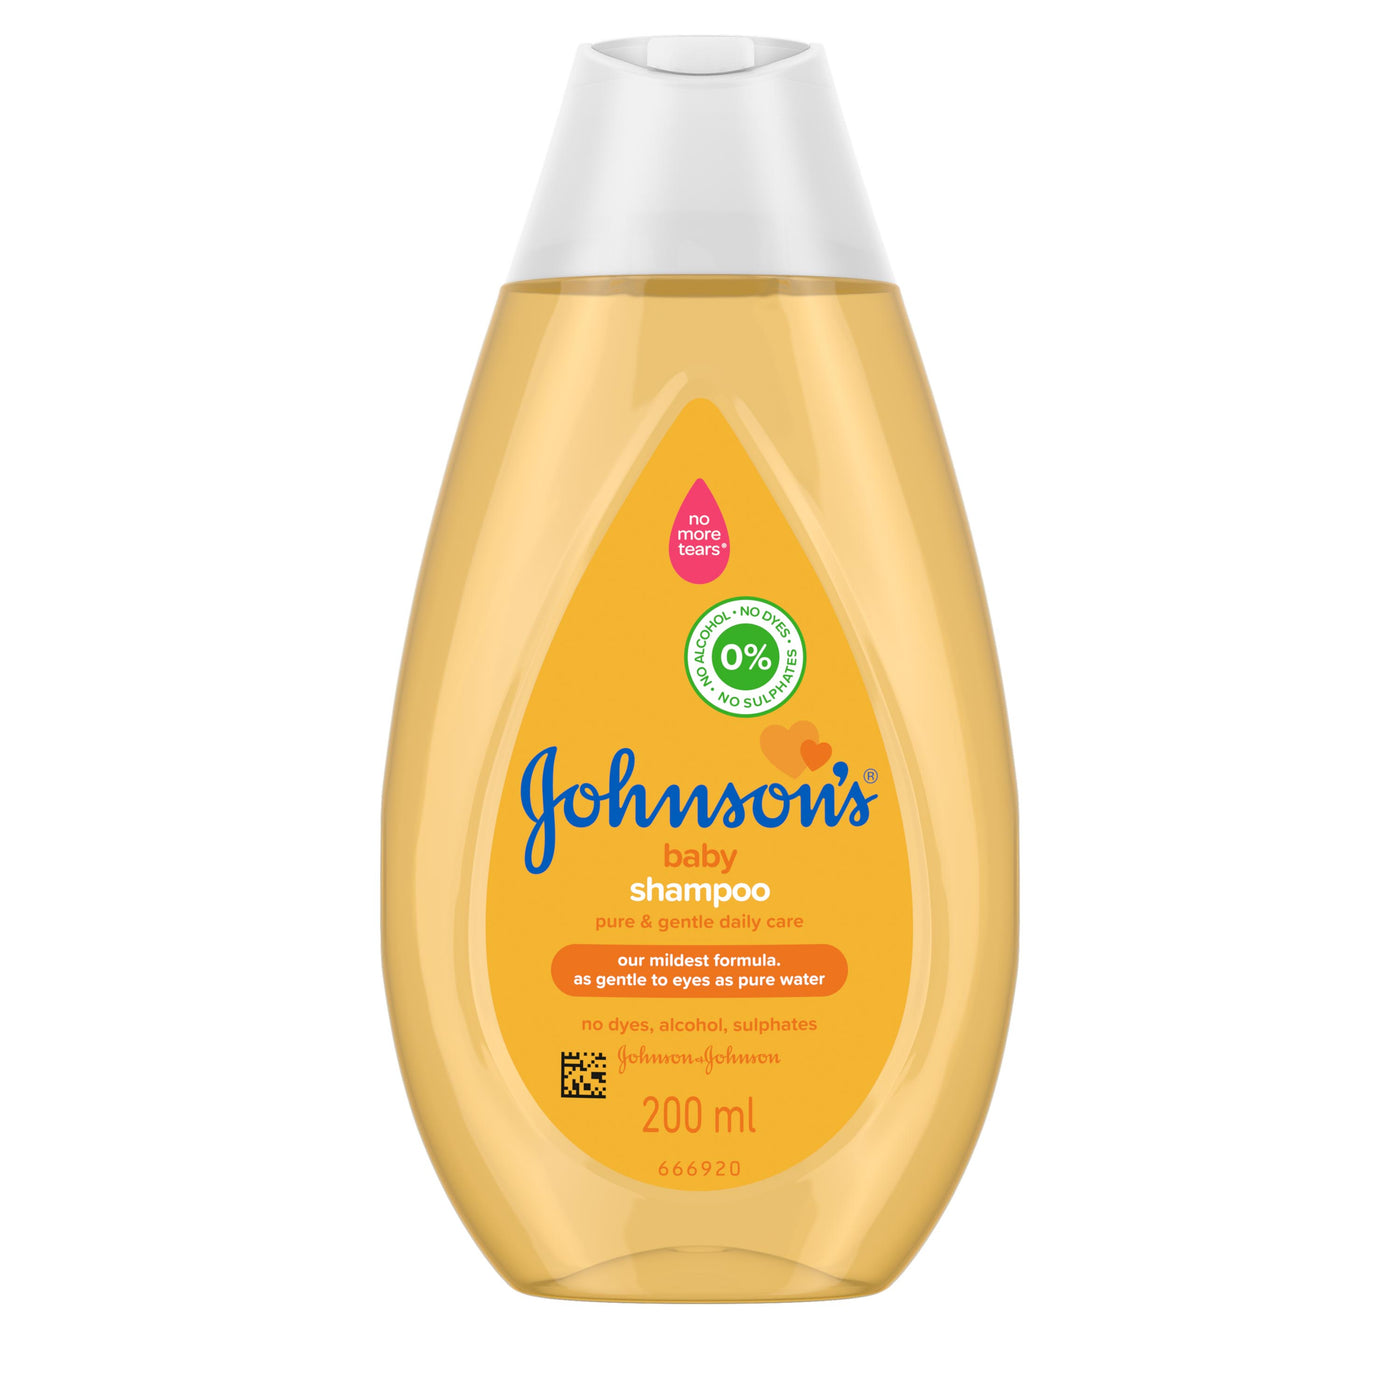 Johnson's Gold shampoo